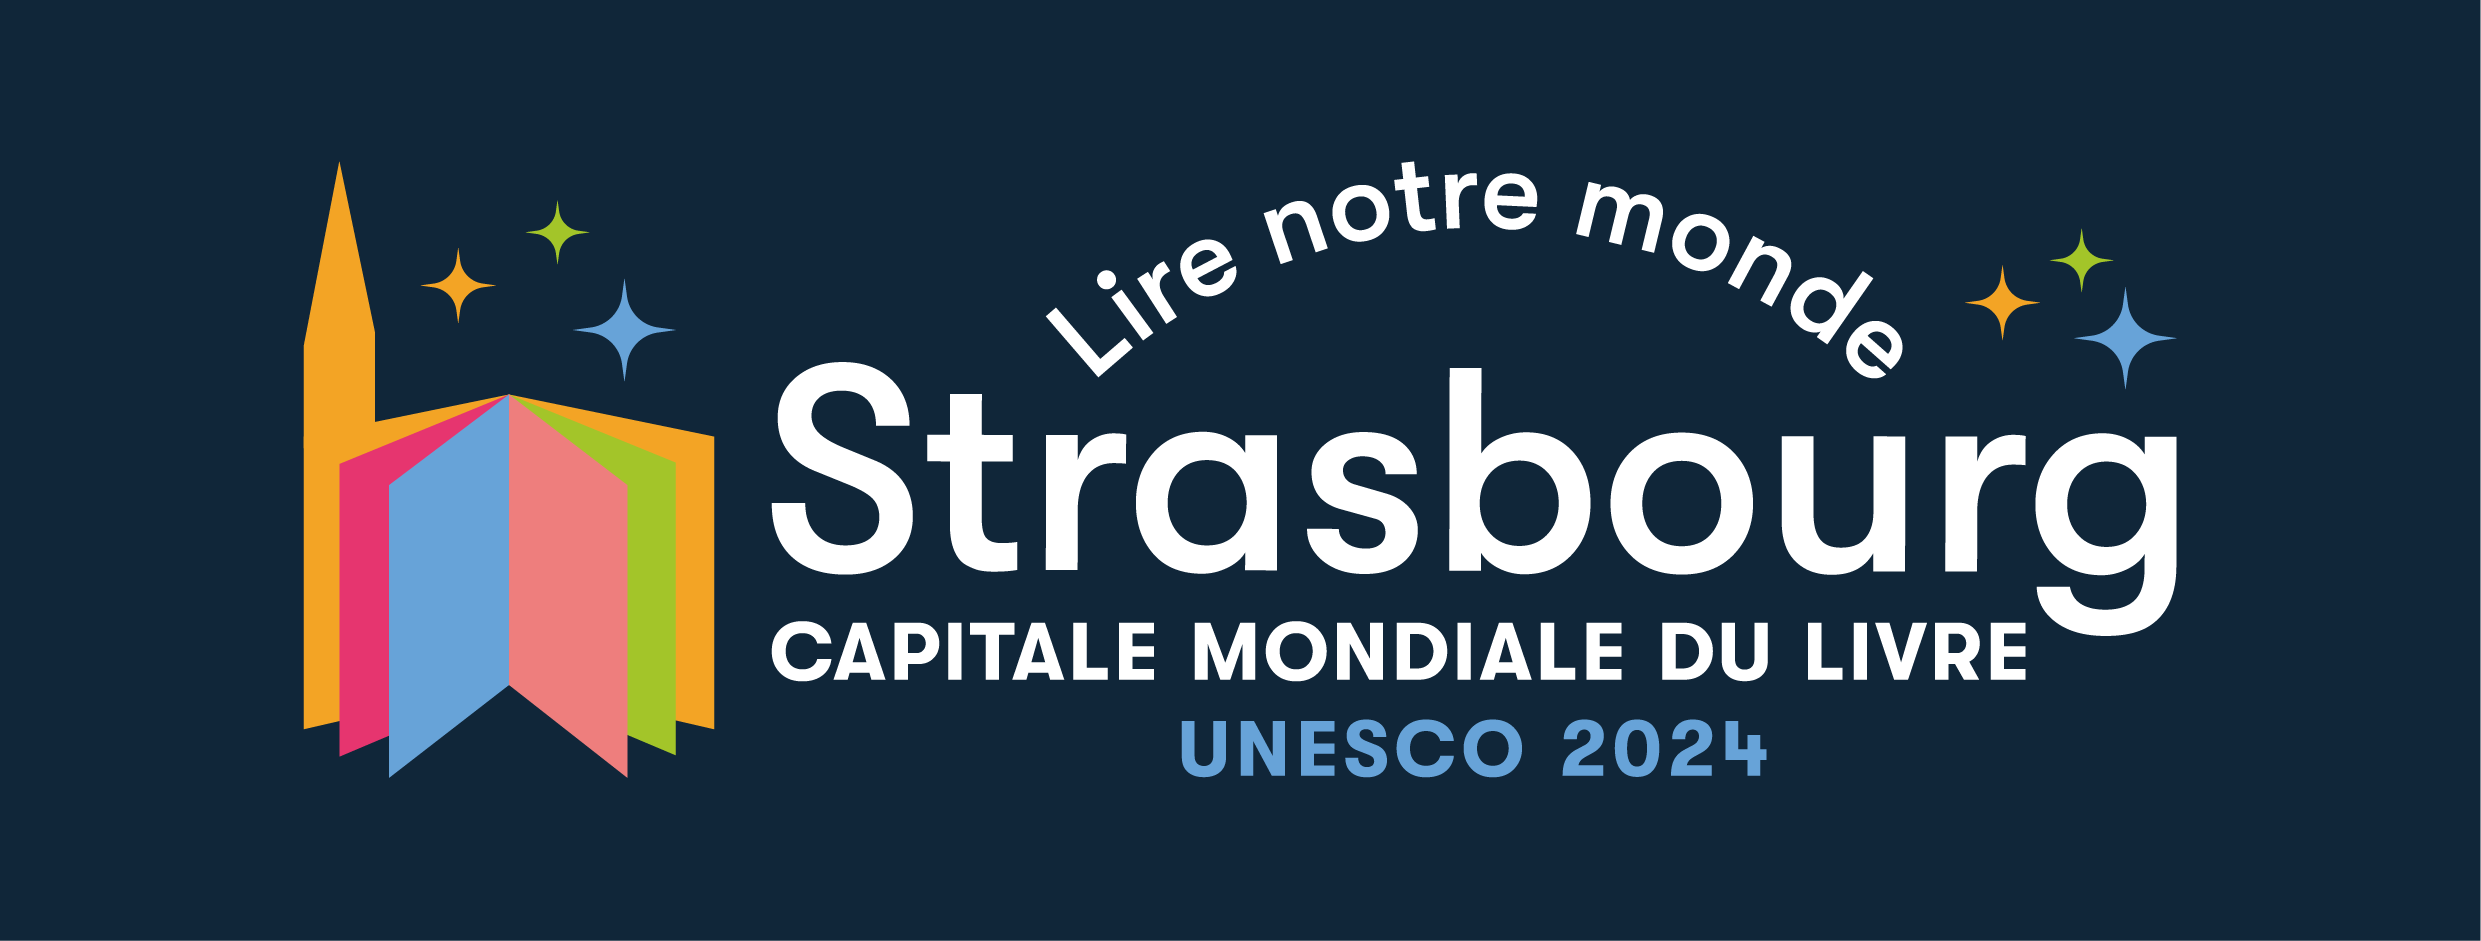 Strasbourg Capitale mondiale du livre Unesco 2024